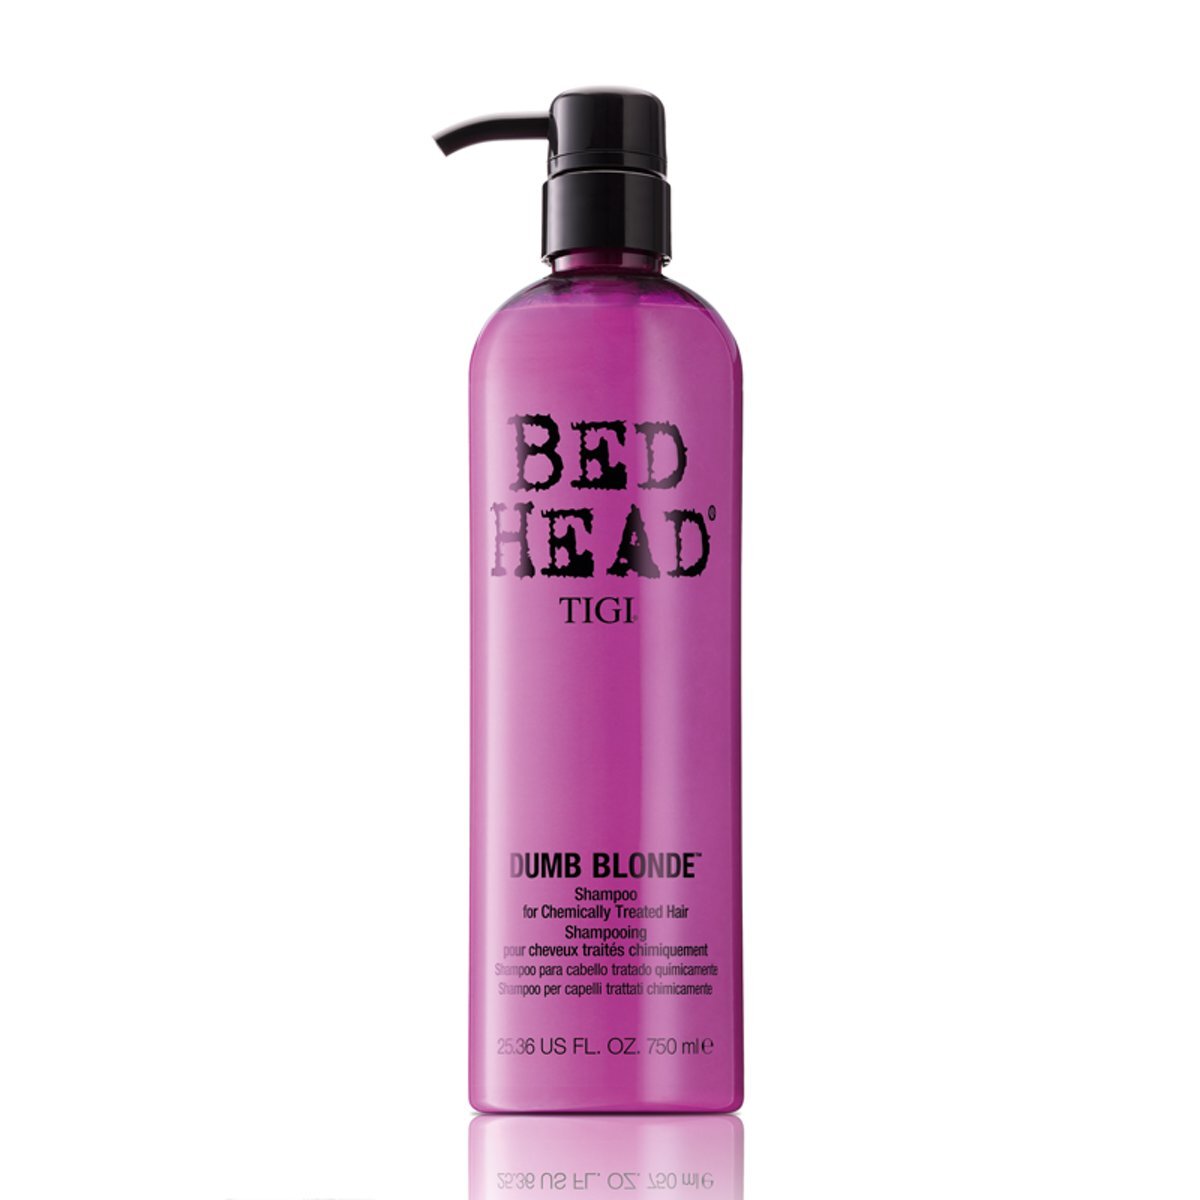 Tigi Bed head dumb blonde shampoo 750ml